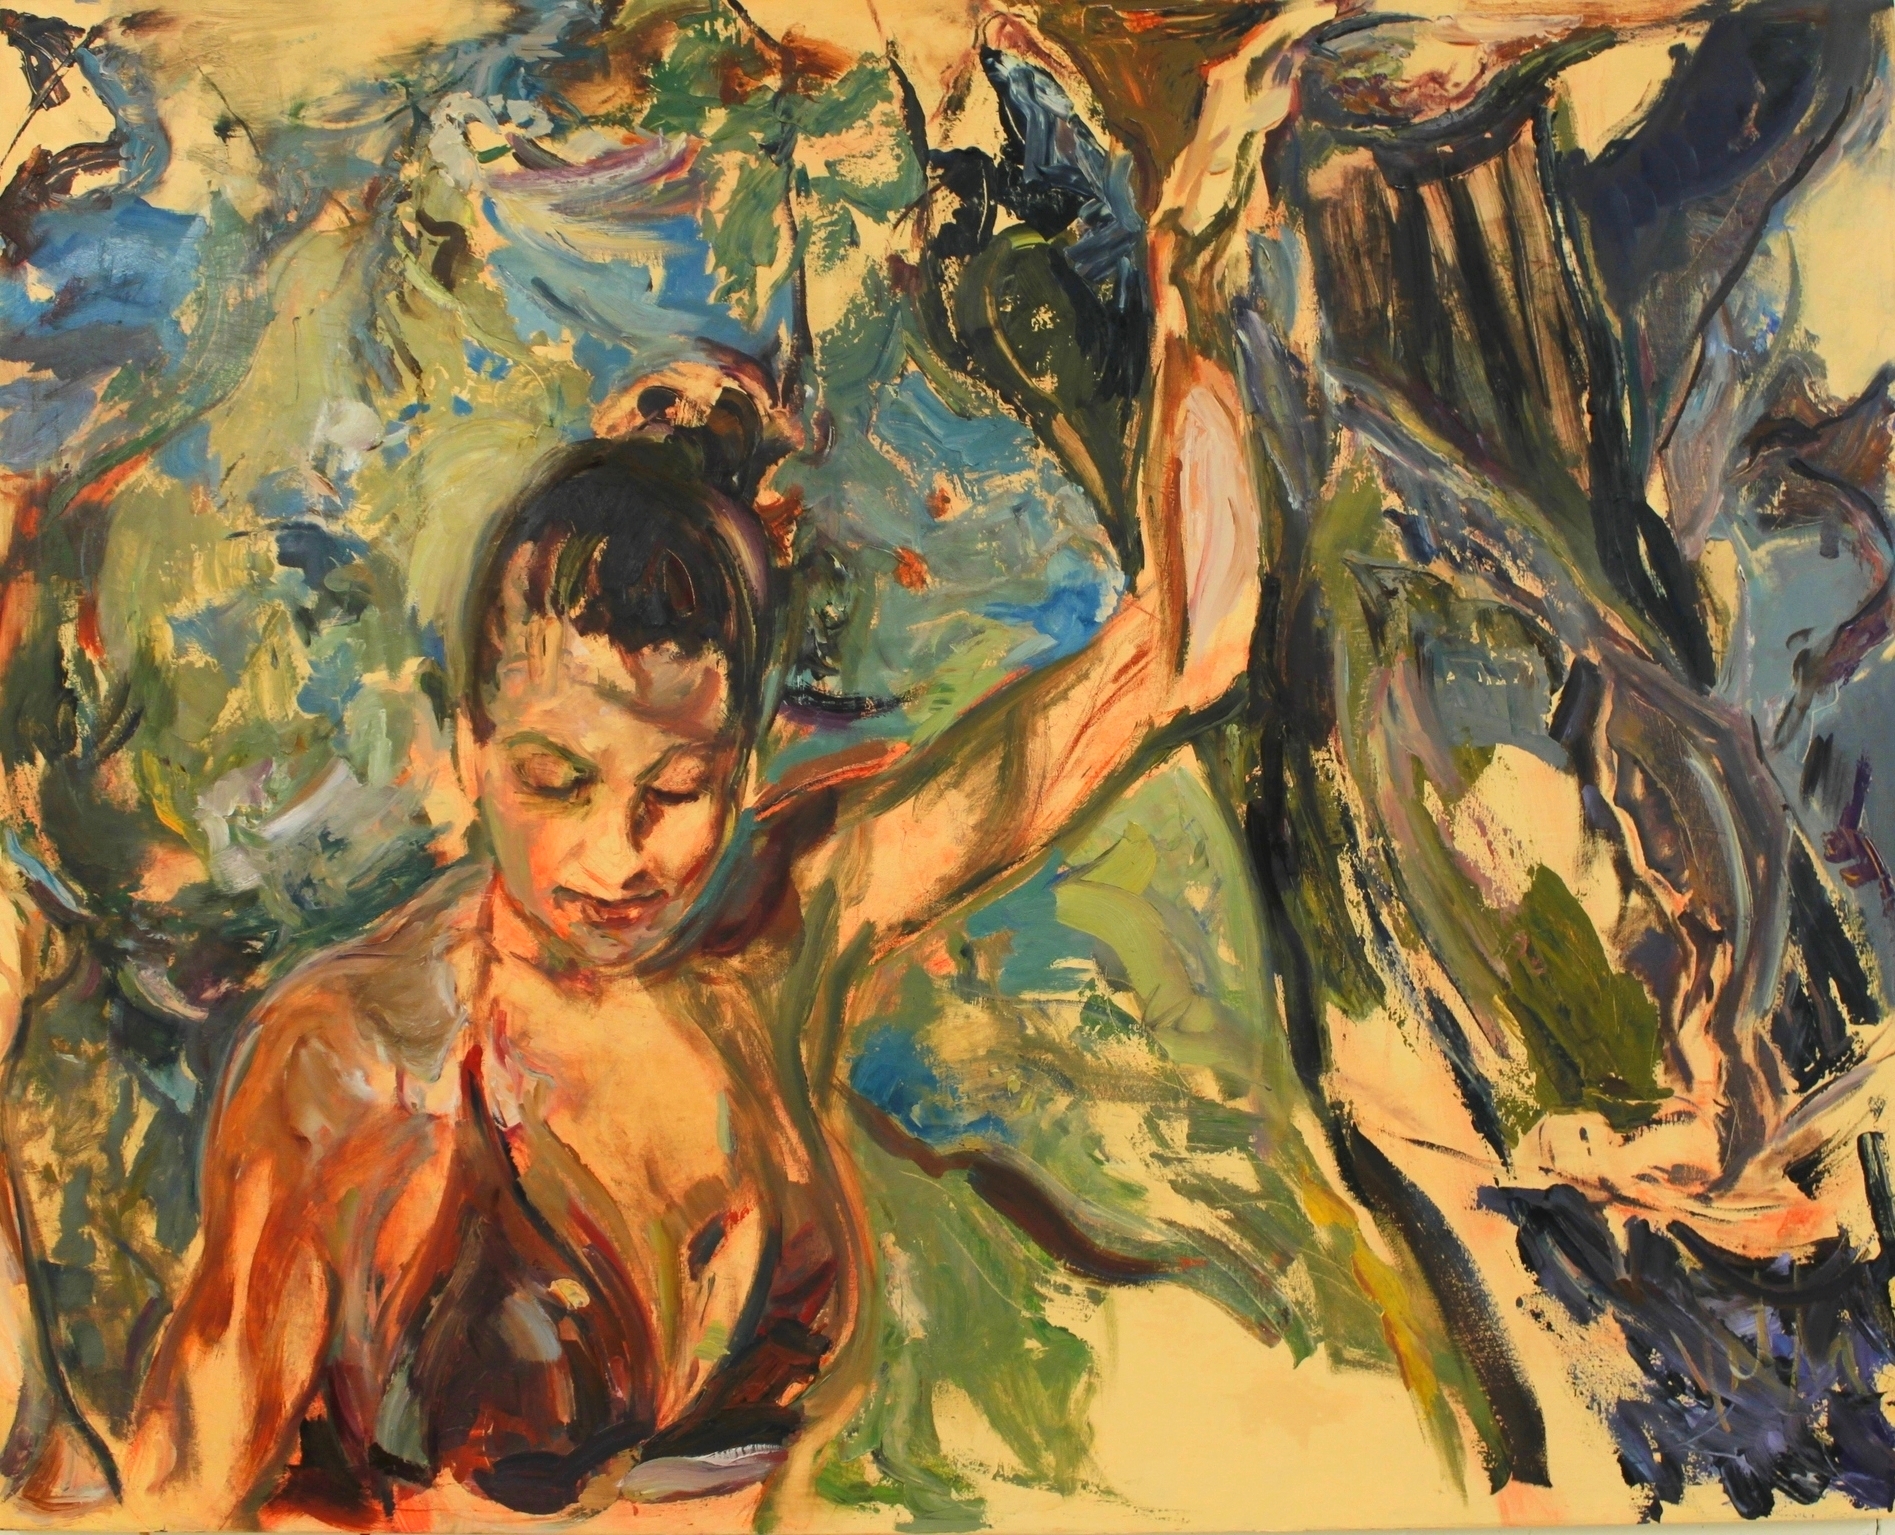 Radiance, 2014, oil on canvas, 48" x 60".